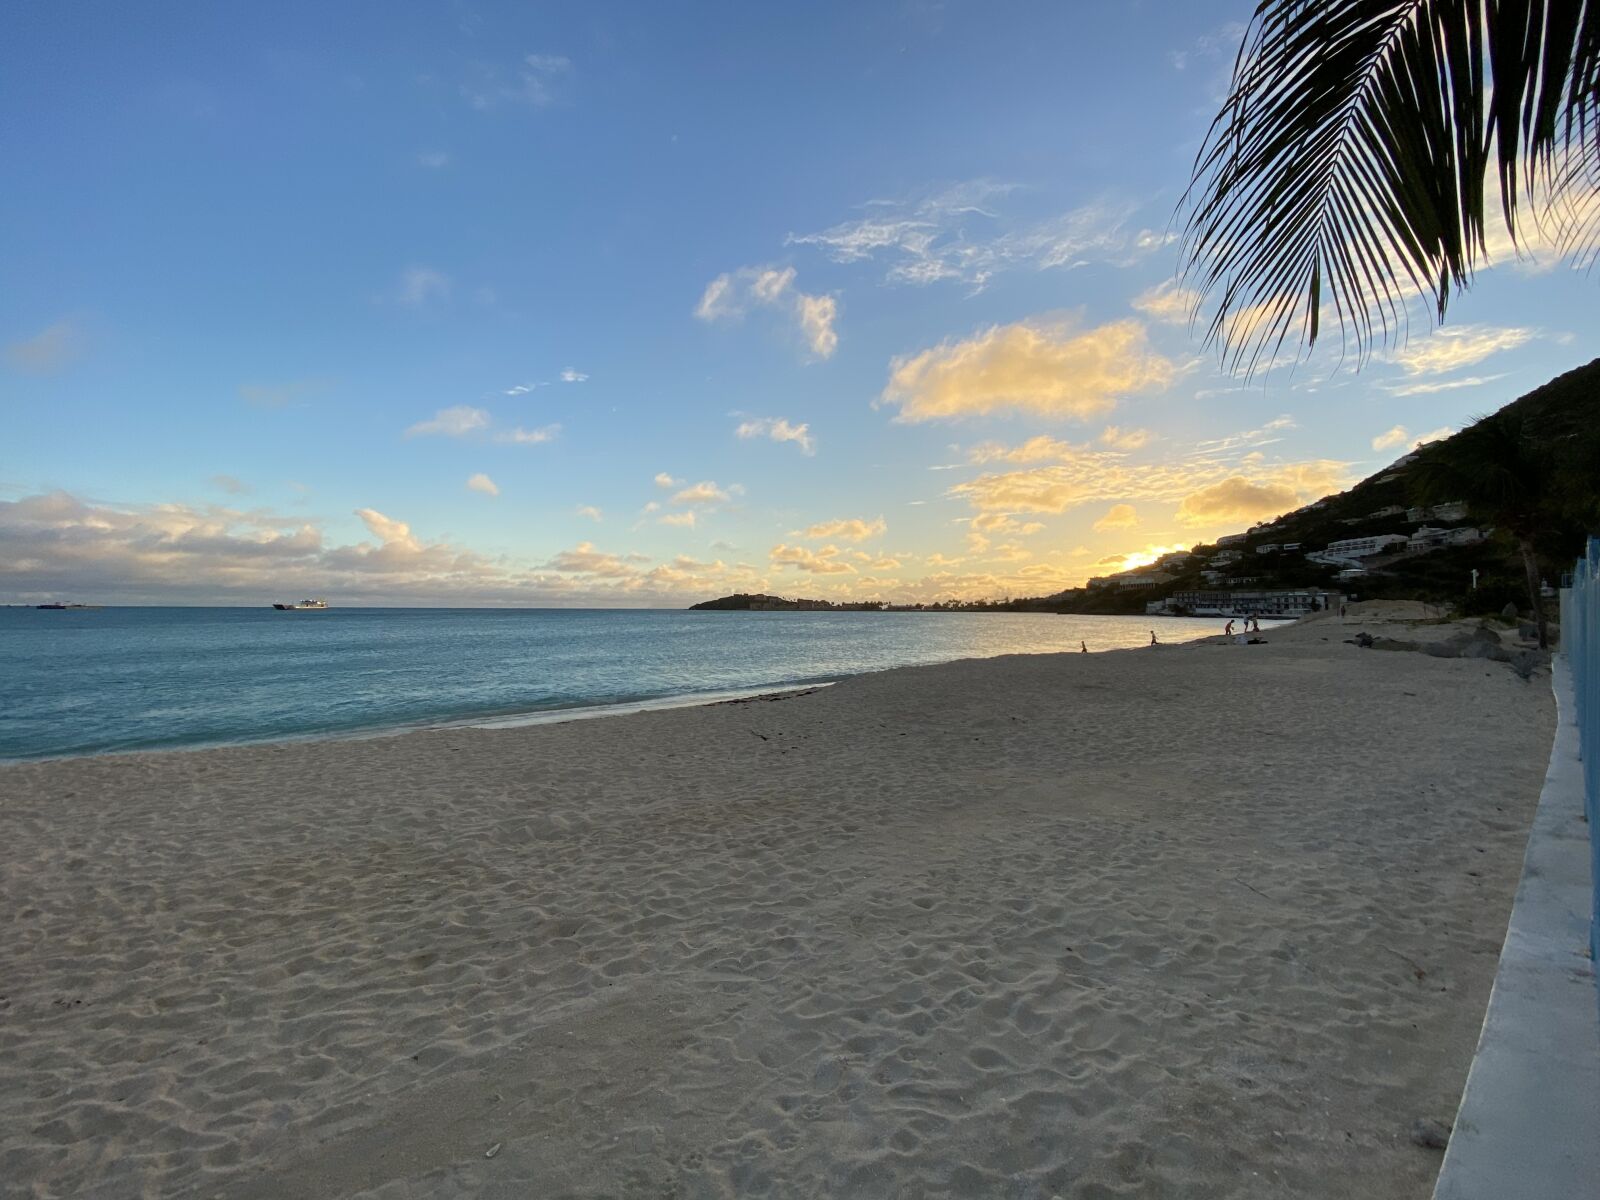 iPhone 11 Pro back triple camera 1.54mm f/2.4 sample photo. Beach, sunrise, palmleaf photography